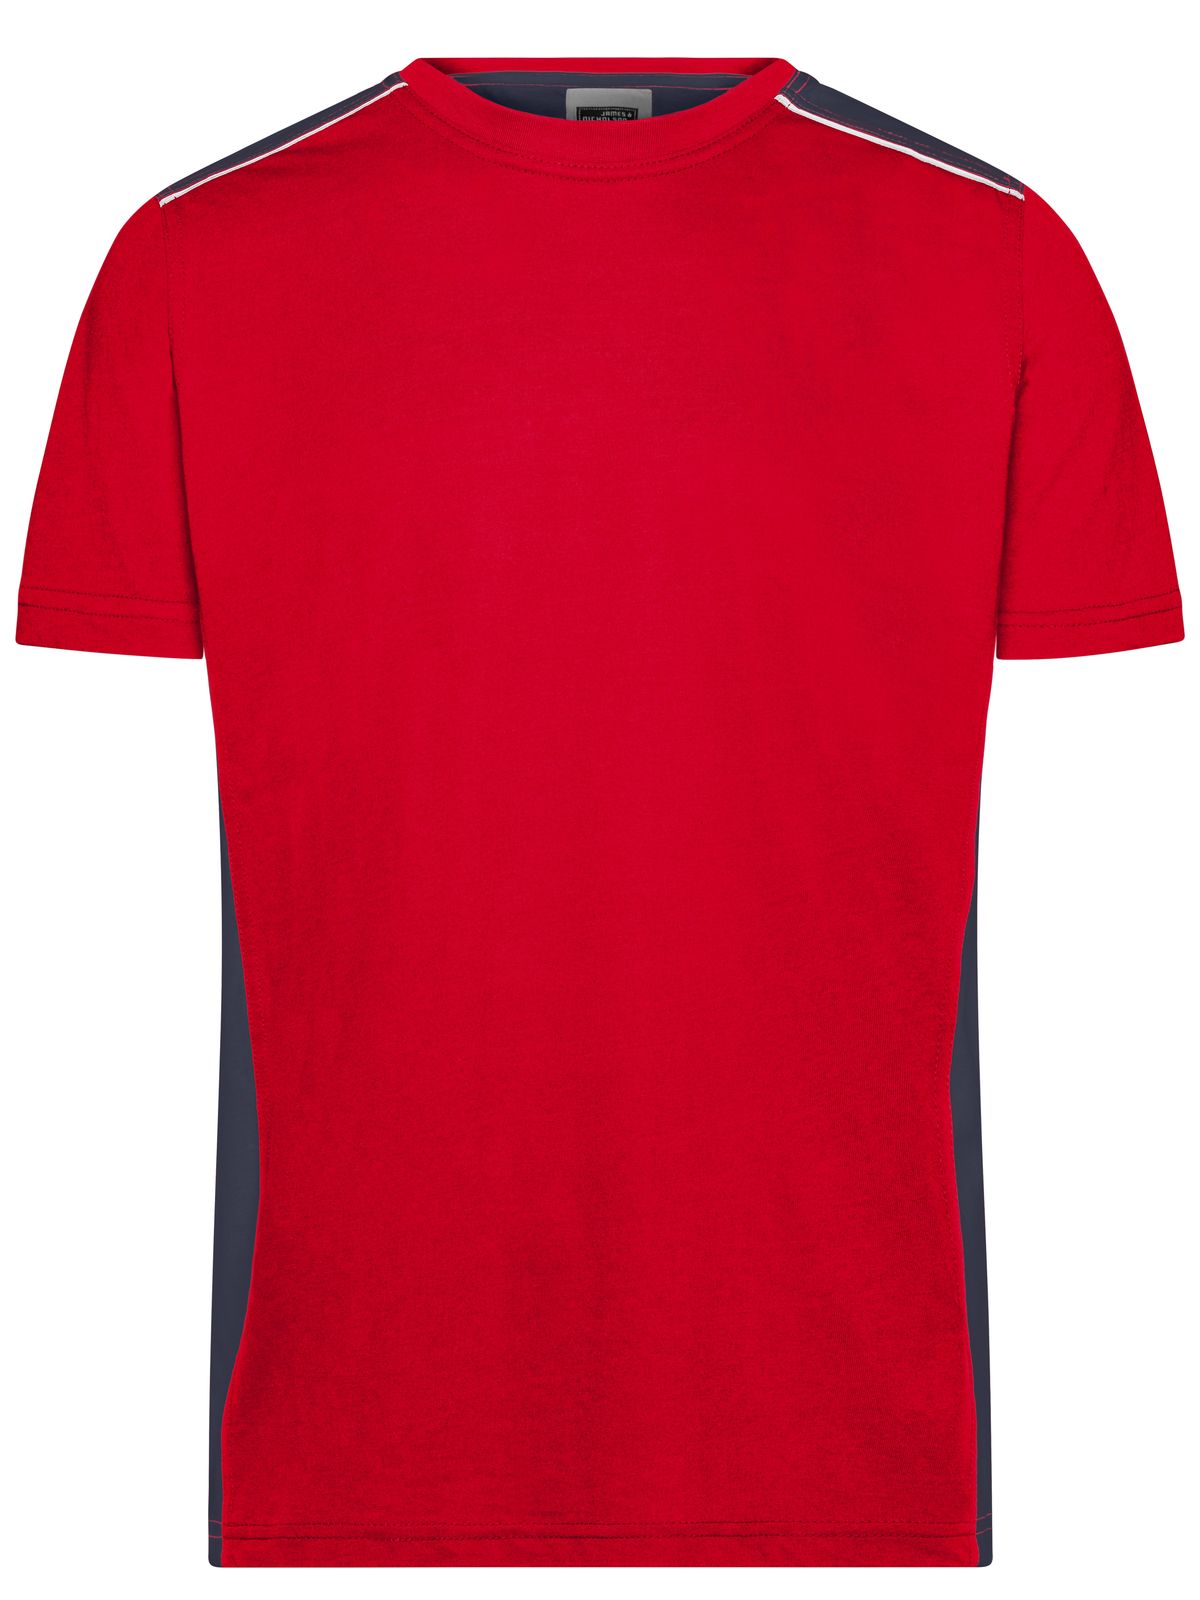 mens-workwear-t-shirt-color-red-navy.webp